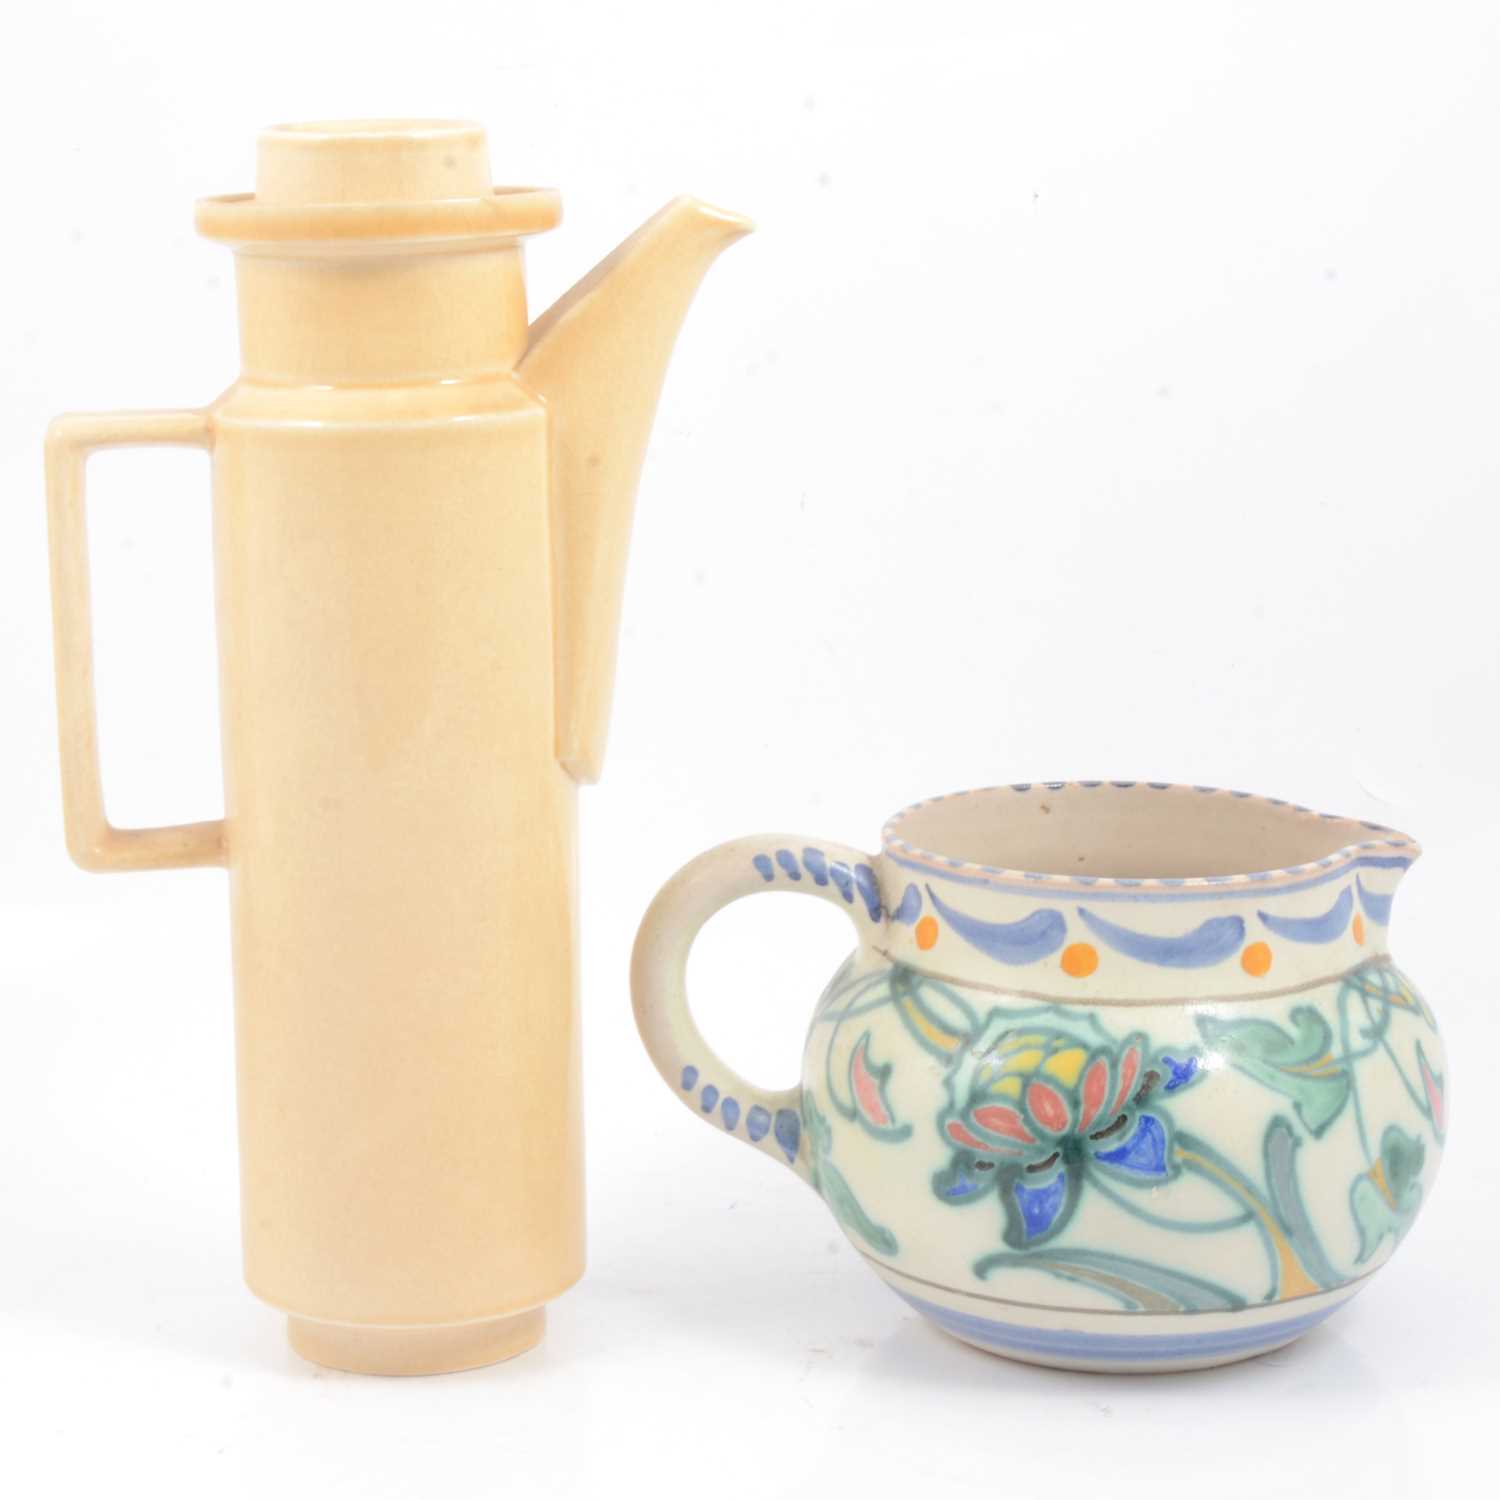 Lot 50 - Honiton pottery jug and Art Deco style coffee pot.